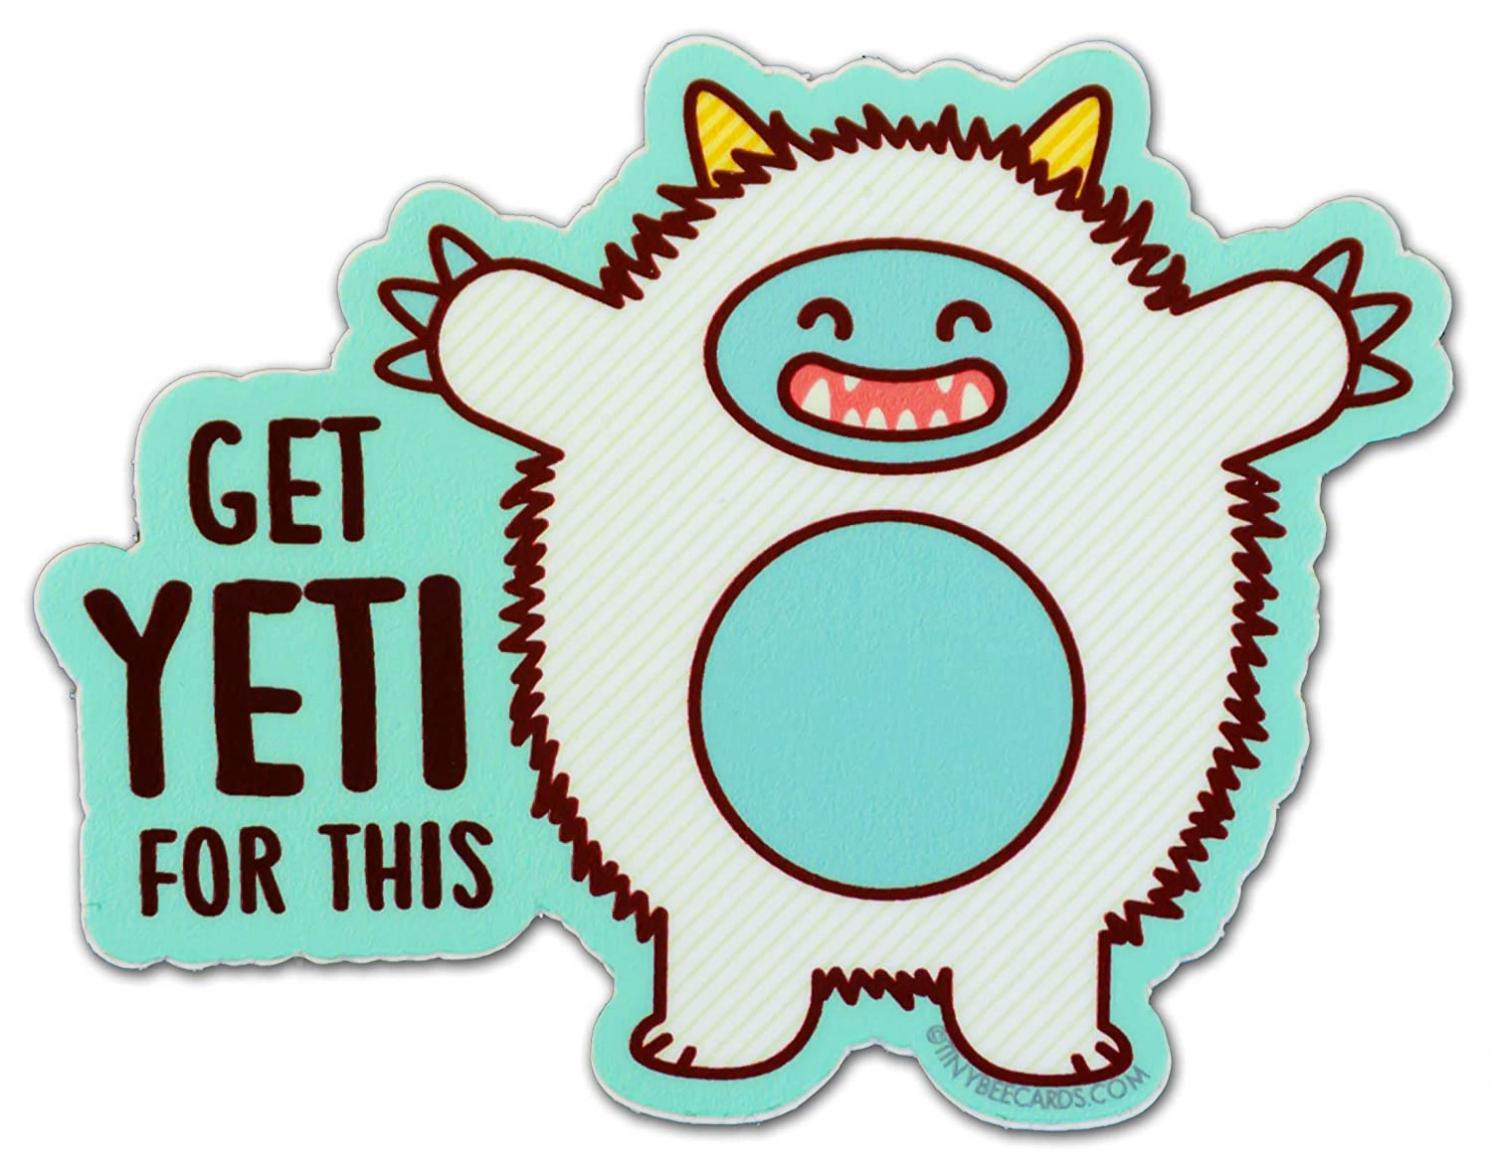 Funny Yeti Sticker"Get Yeti For This" - Cute Winter Creature Sticker for Water Bottle, Bike, Laptop Etc. Dishwasher Safe